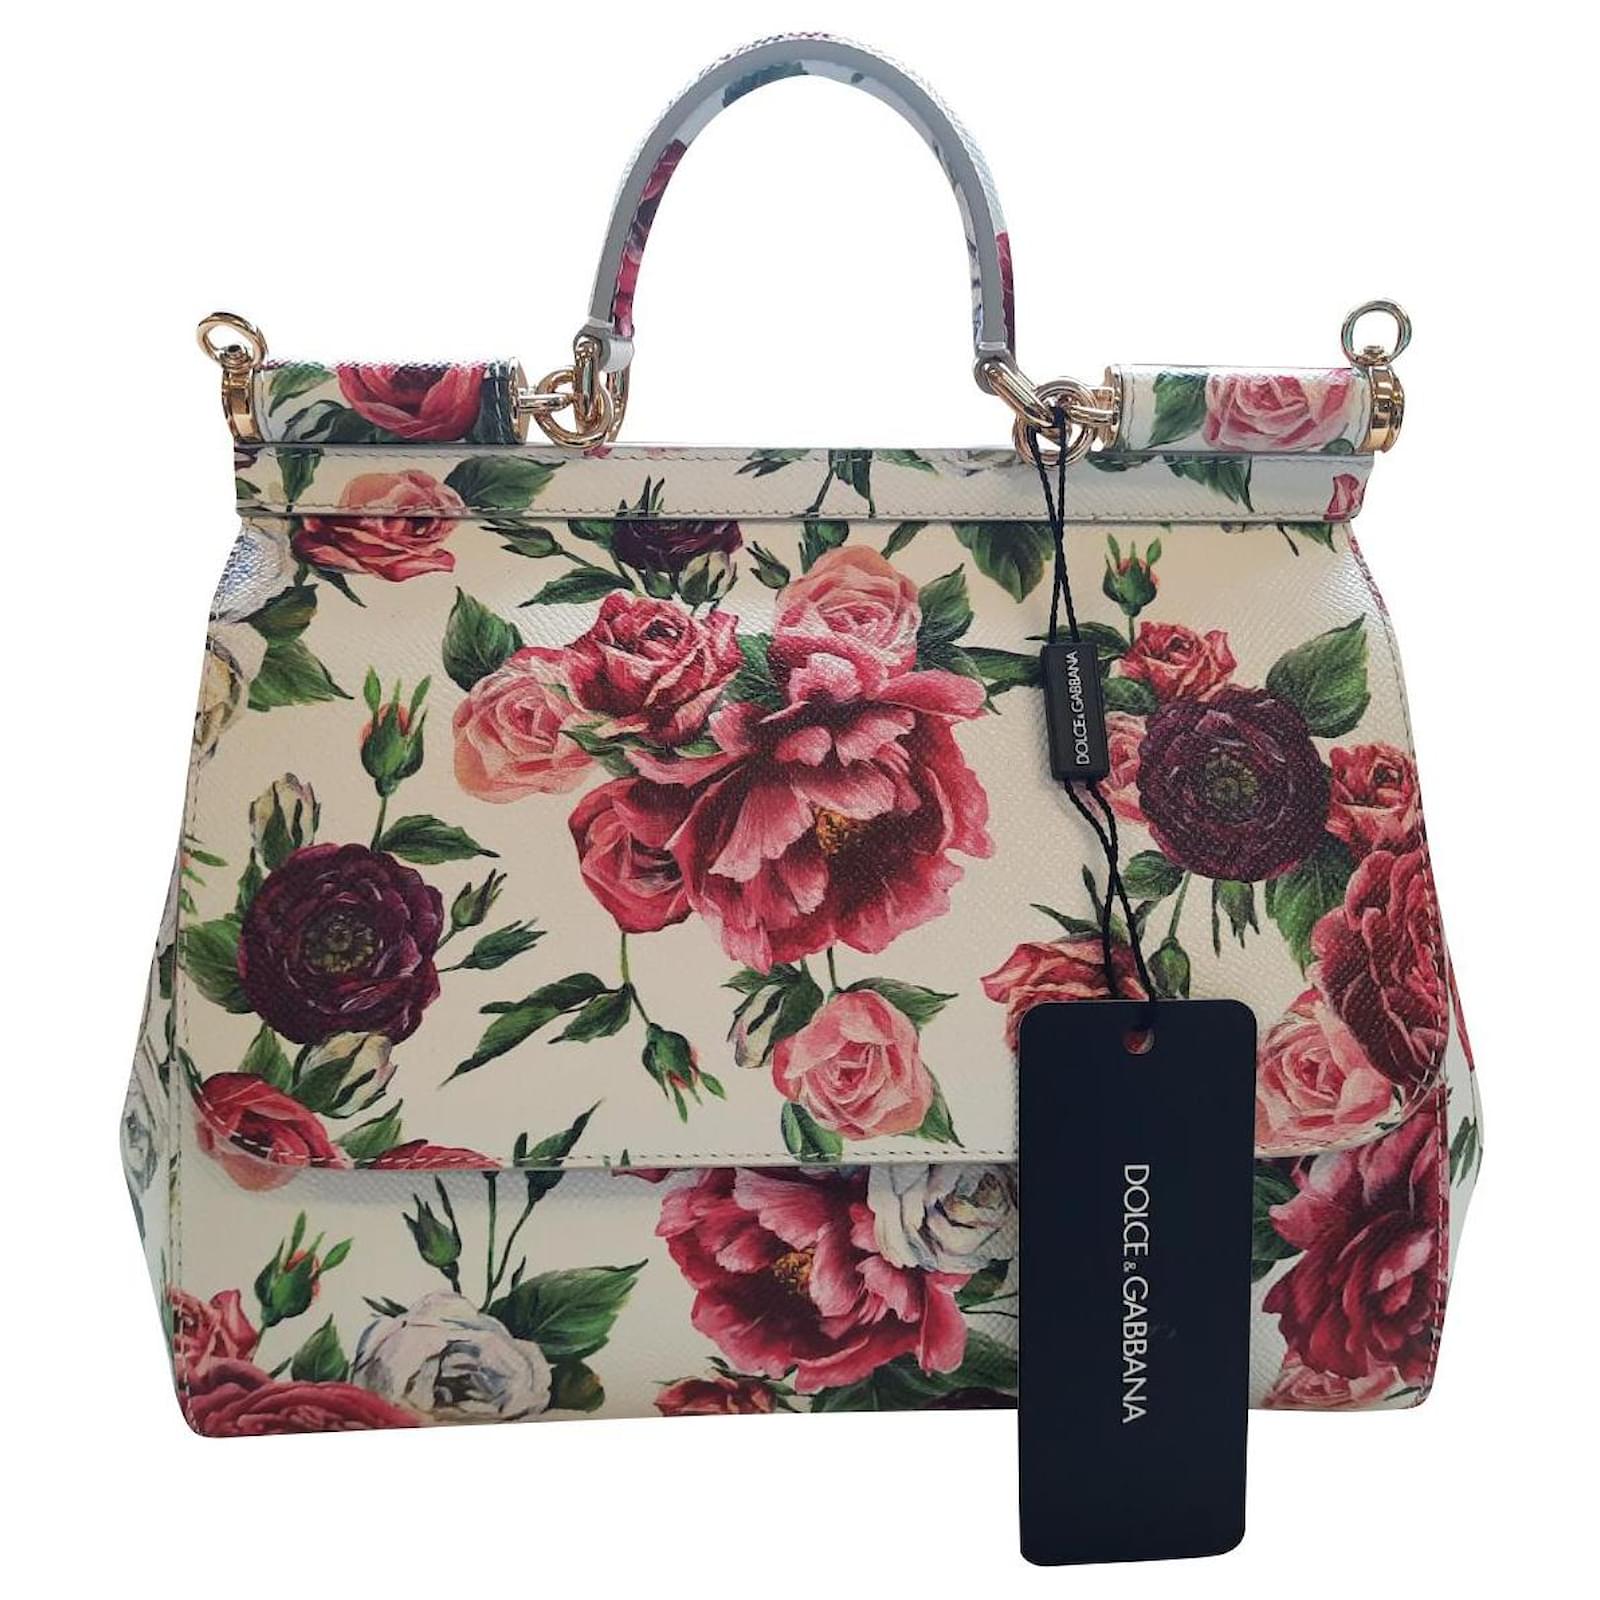 dolce gabbana multiple colors leather sicily flowers bag handbags